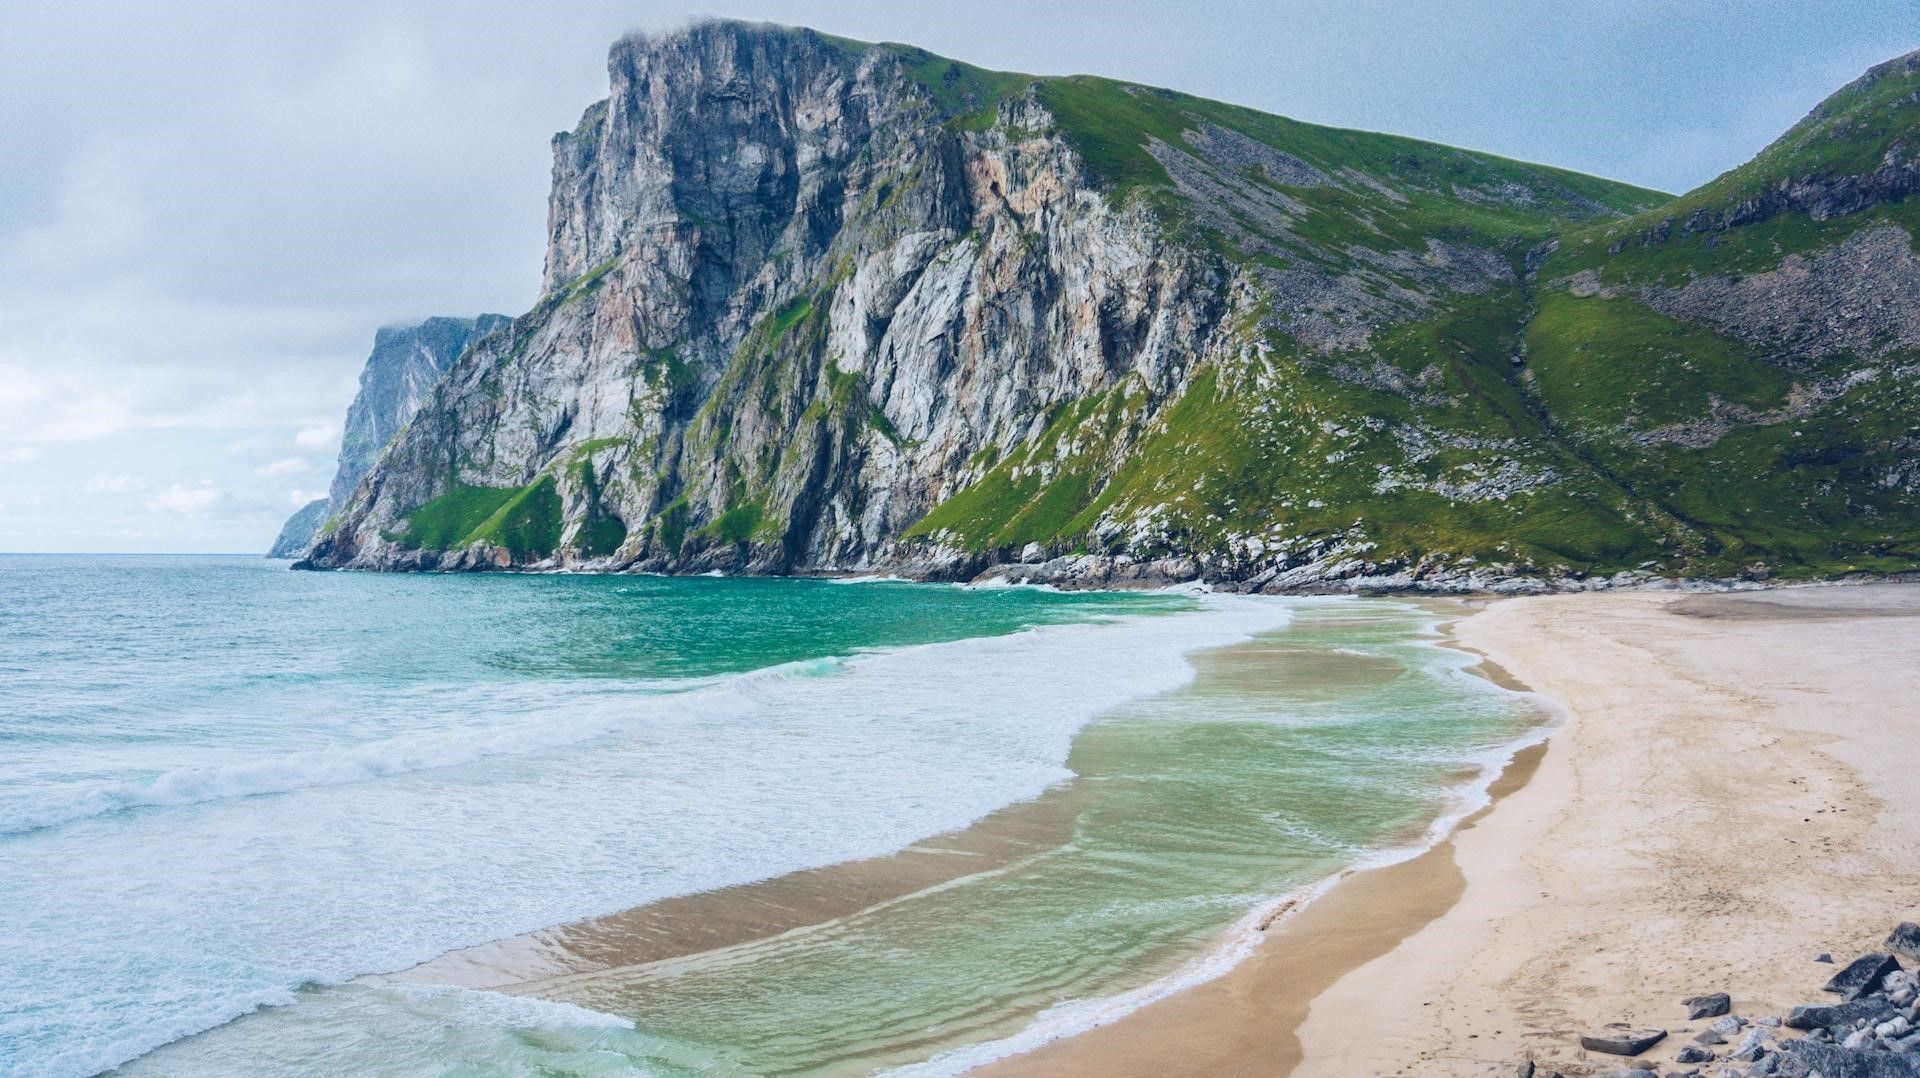 Uncover natural wonders and secrets along the European coastline